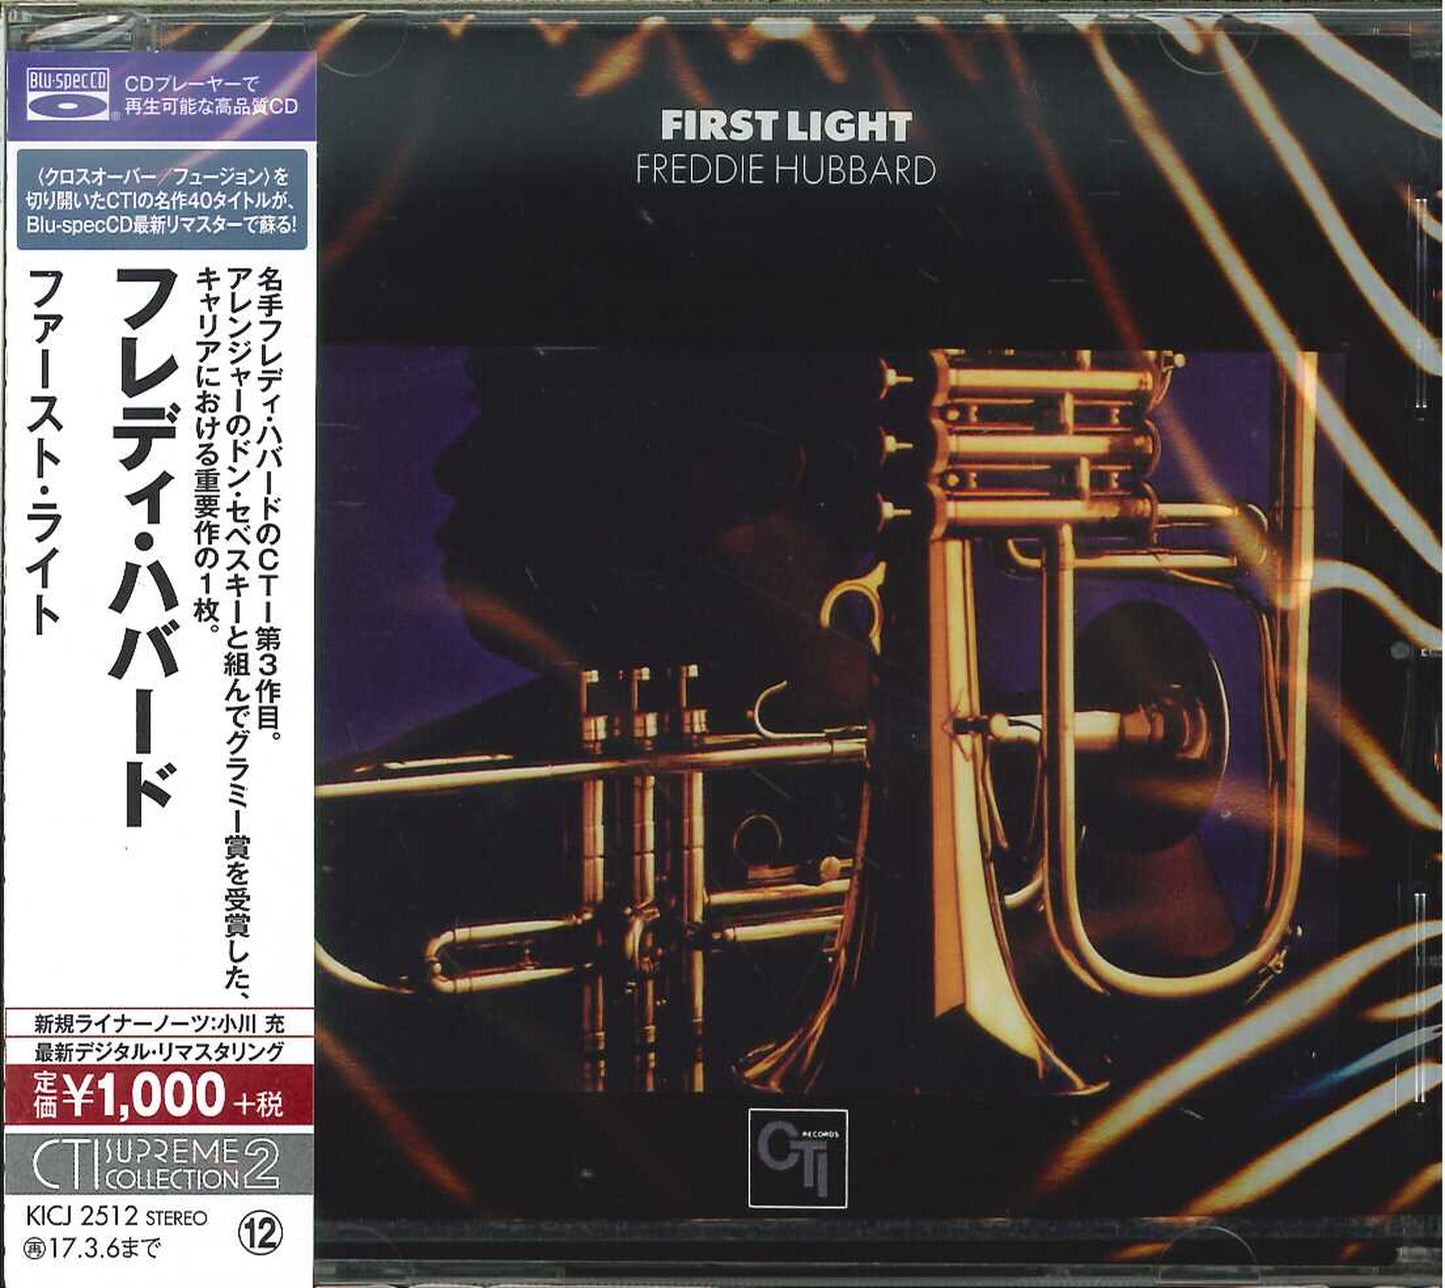 Freddie Hubbard - First Light - Japan  Blu-spec CD